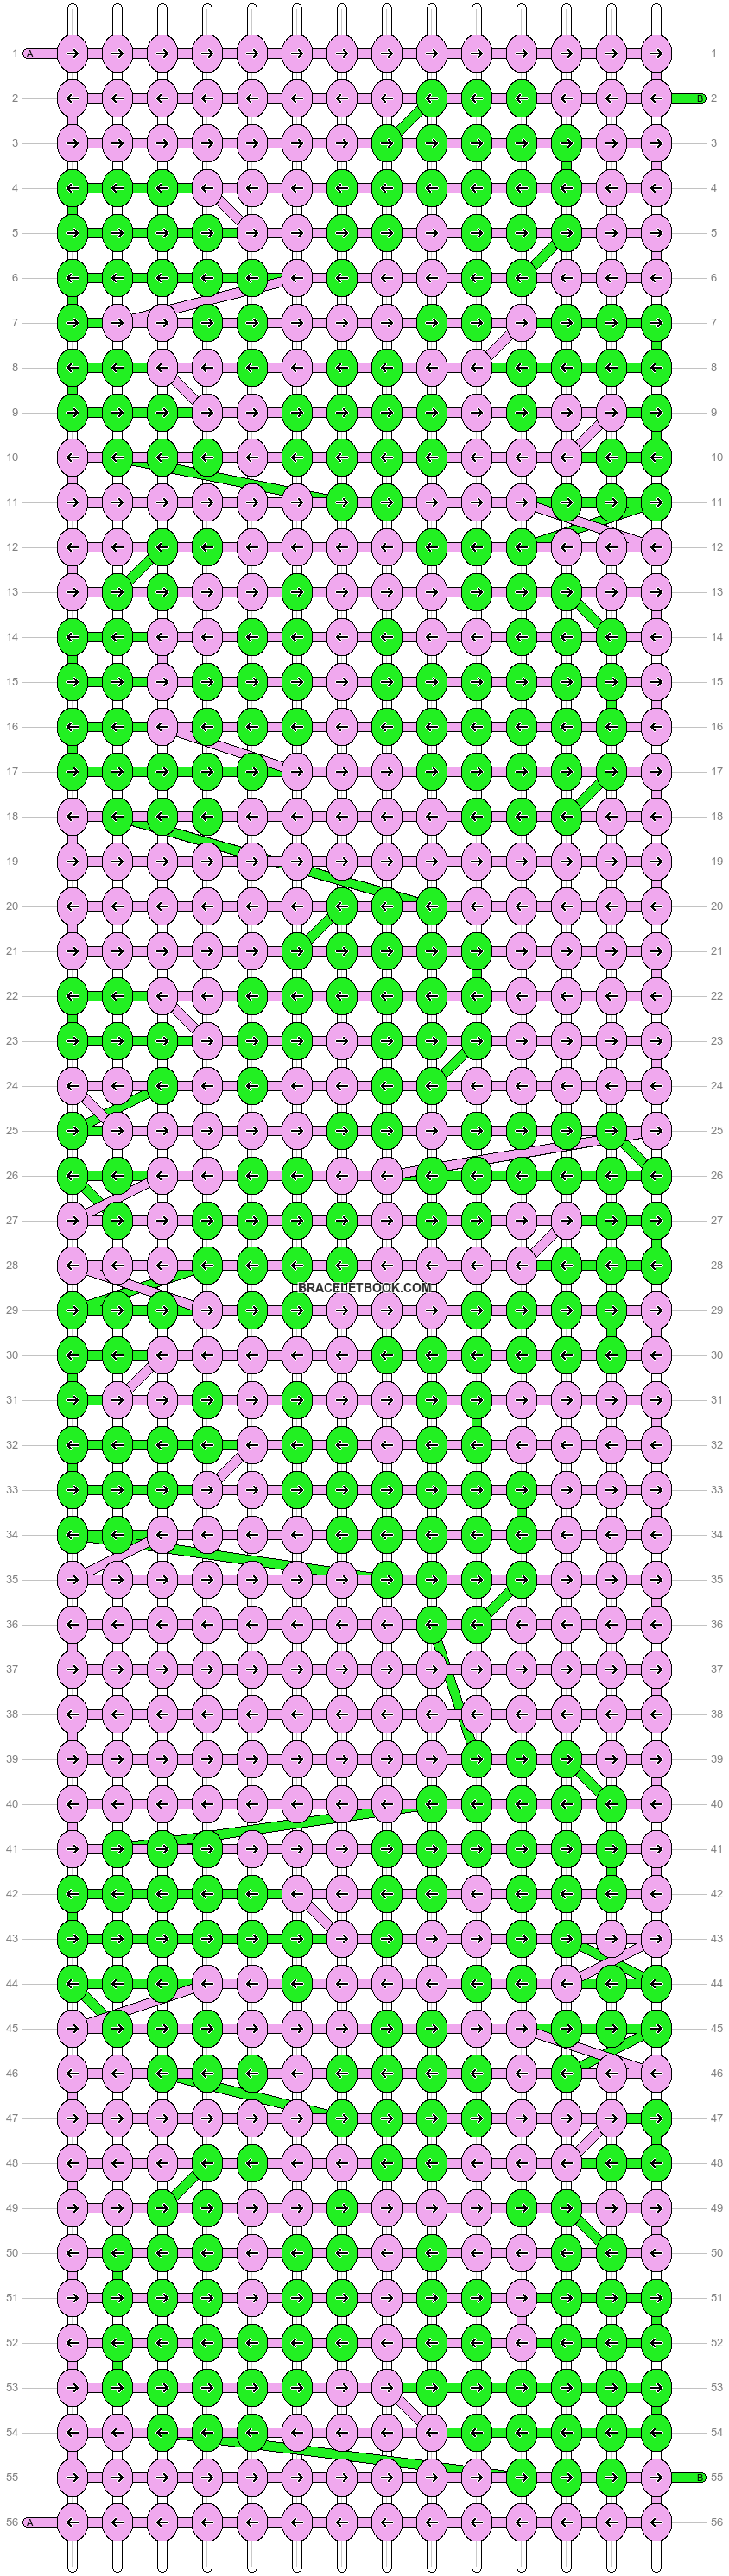 Alpha pattern #43453 variation #154091 pattern